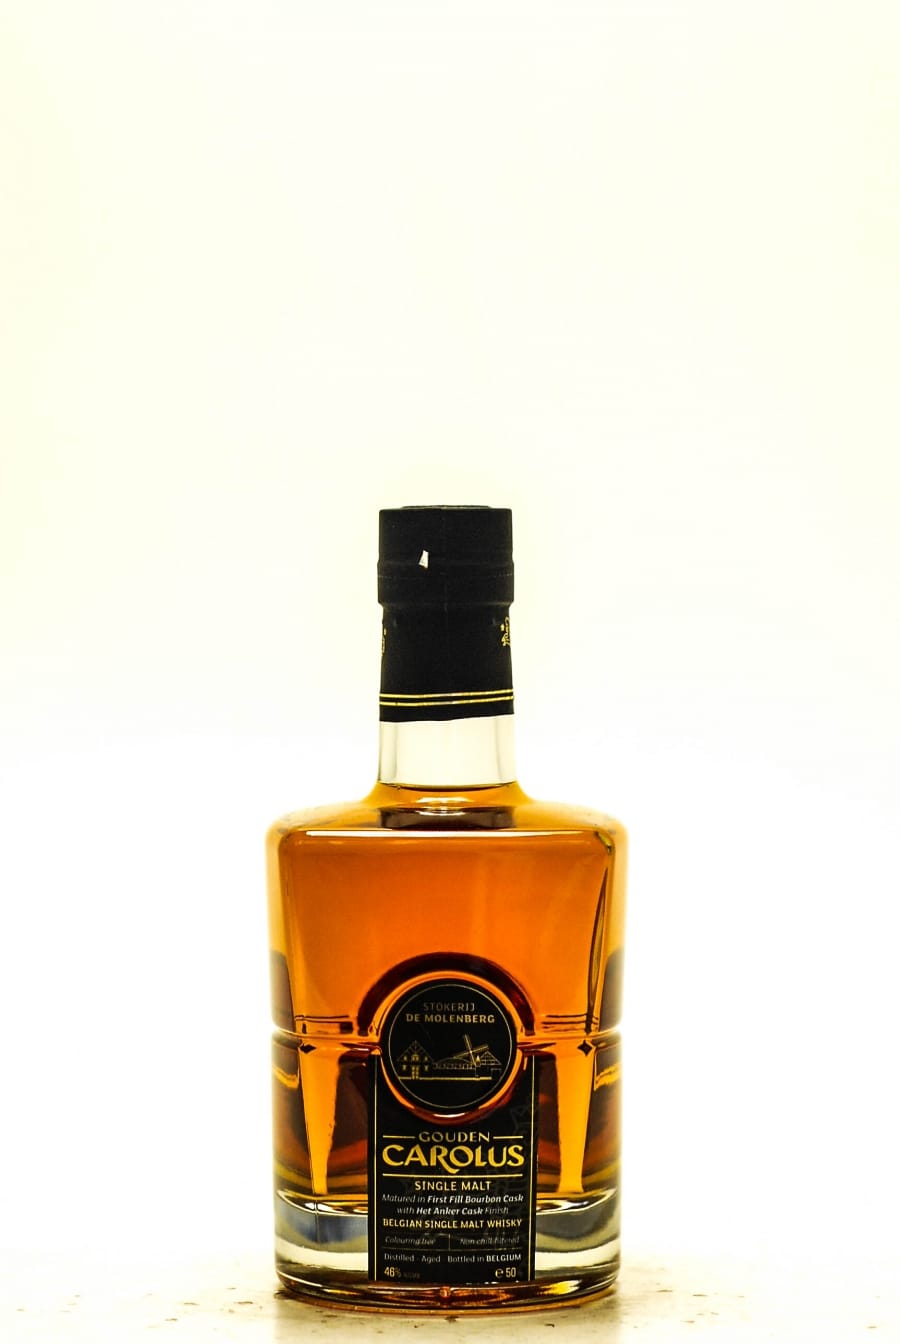 Gouden Carolus - Gouden Carolus Het Anker 3 YO First Fill Bourbon Cask finish 46% NV Perfect